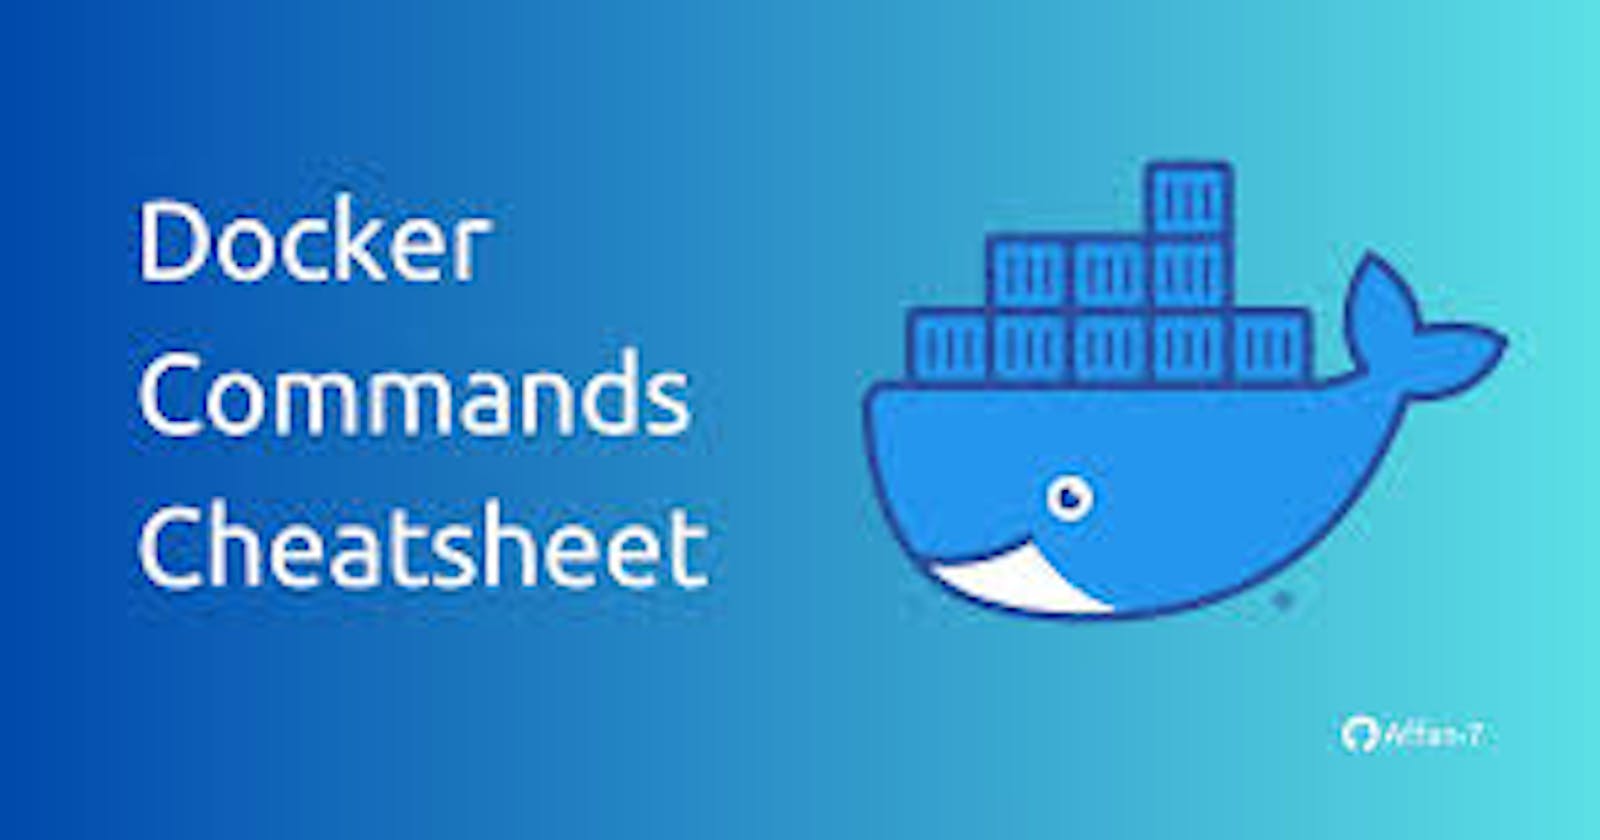 Docker Commands Cheatsheet.